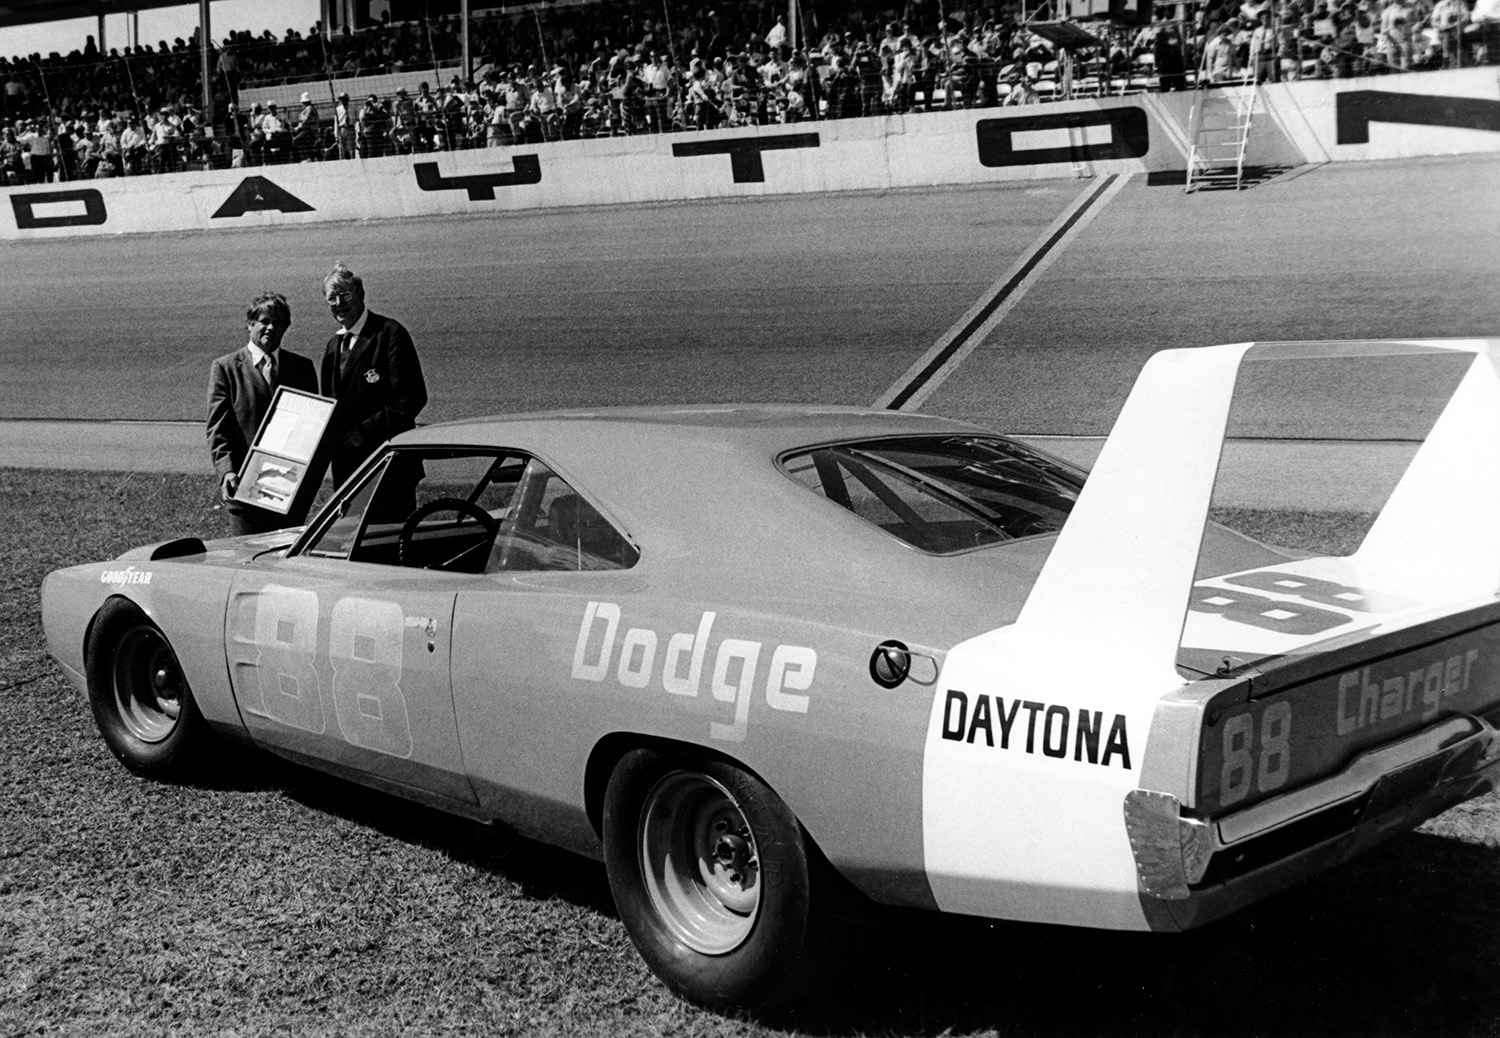 1969 Dodge charger Daytona DC-93 rear 3/4 at Talladega, first car to hit 200 MPH